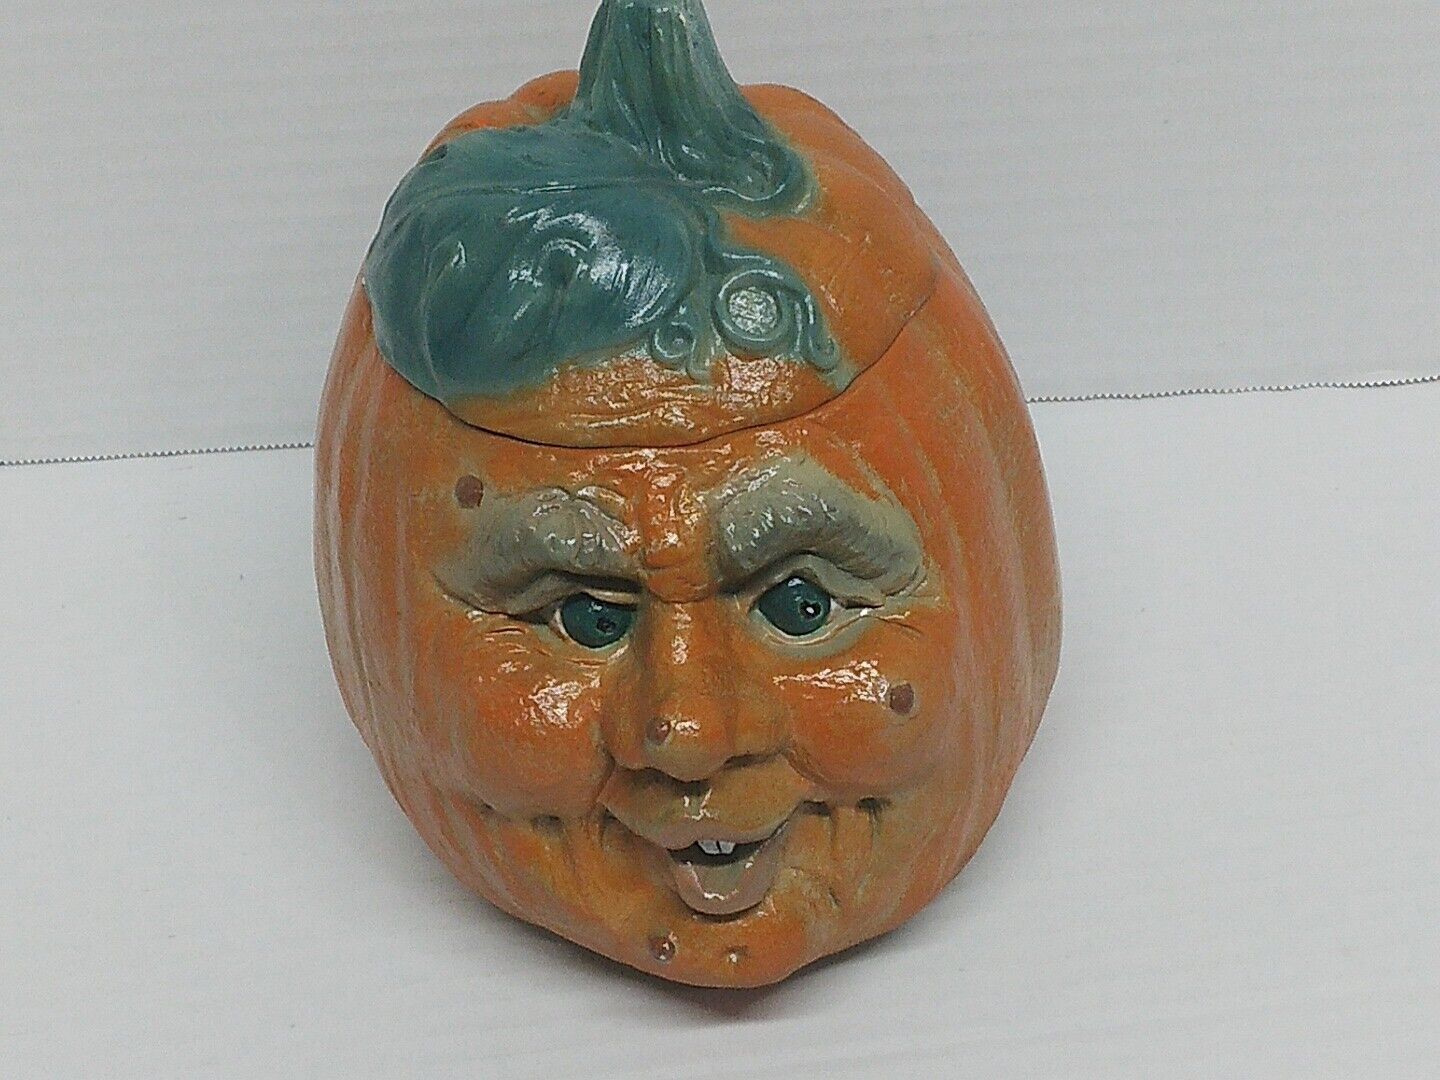 Creepy Halloween Anthropomorphic Pumpkin head Ceramic Lantern Candy Cookie Jar